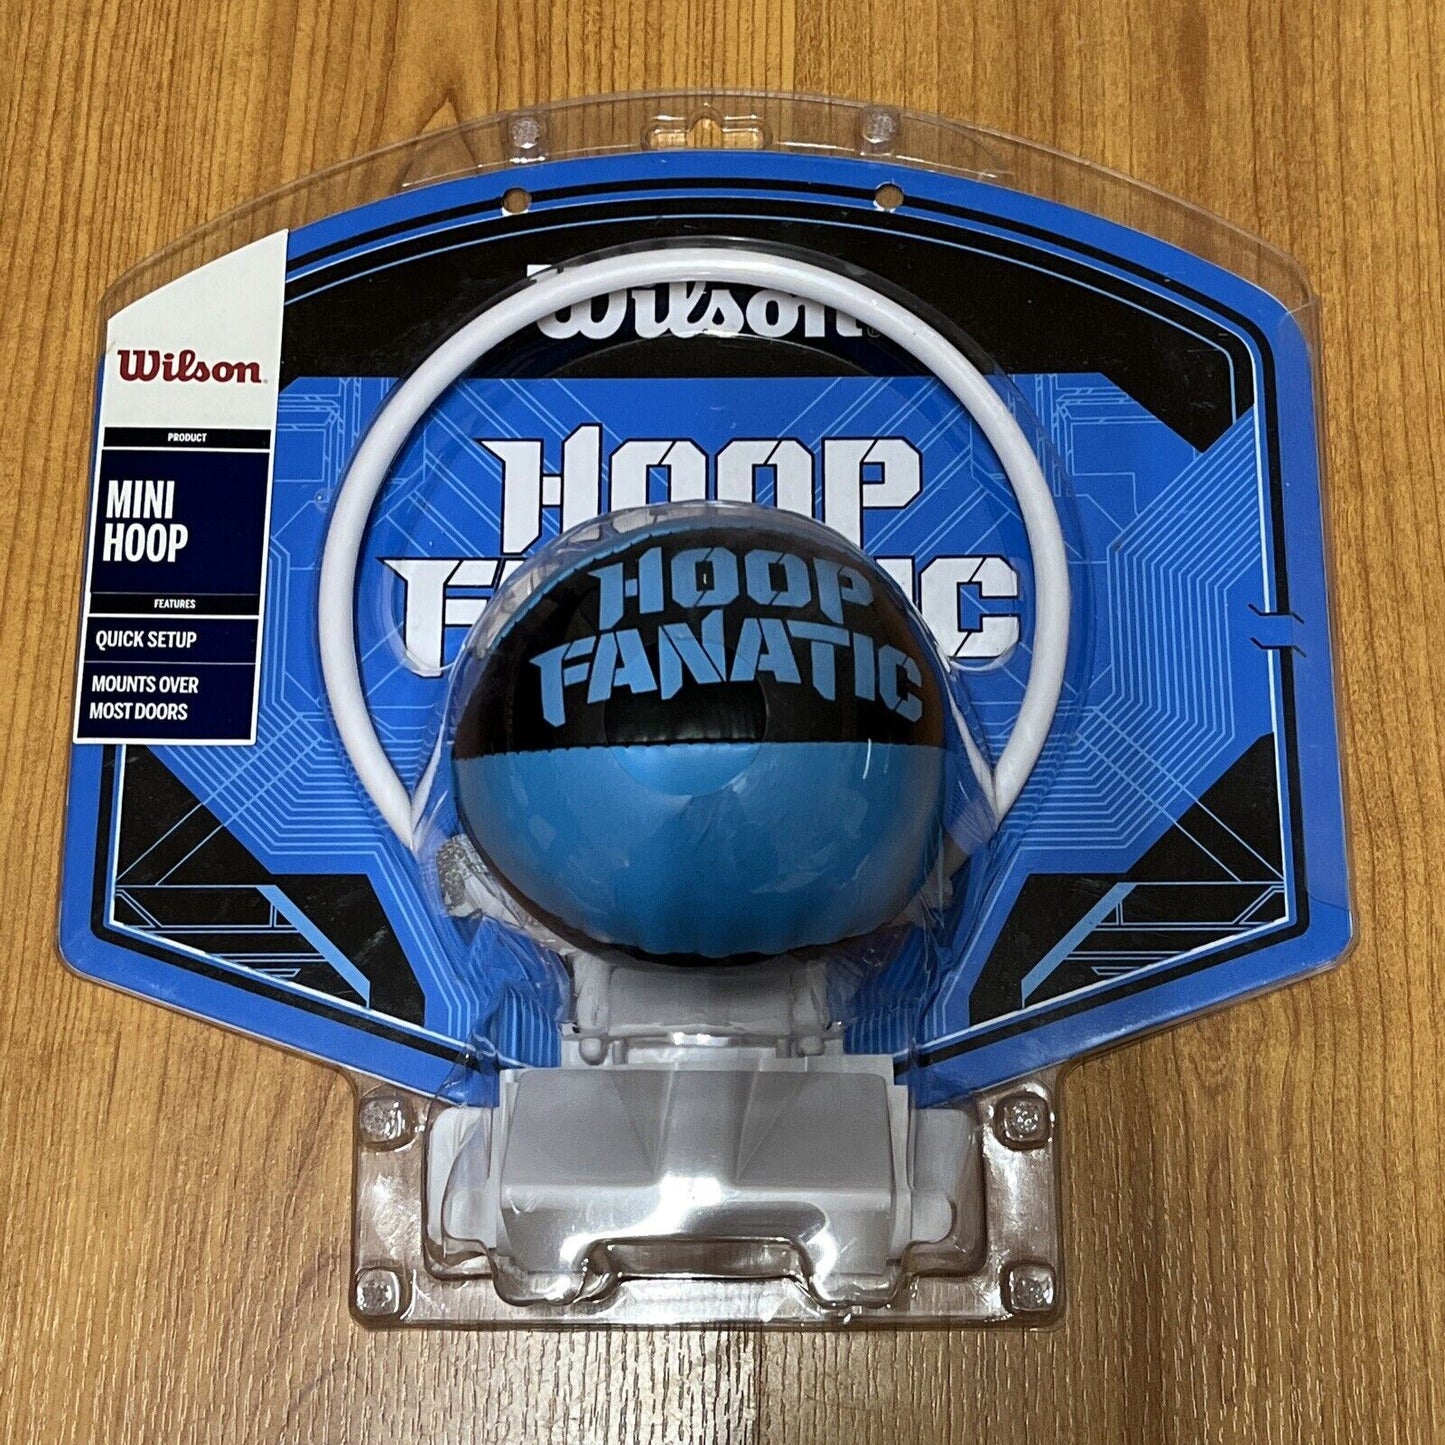 Wilson Mini Hoop Basketball Set & Ball NEW